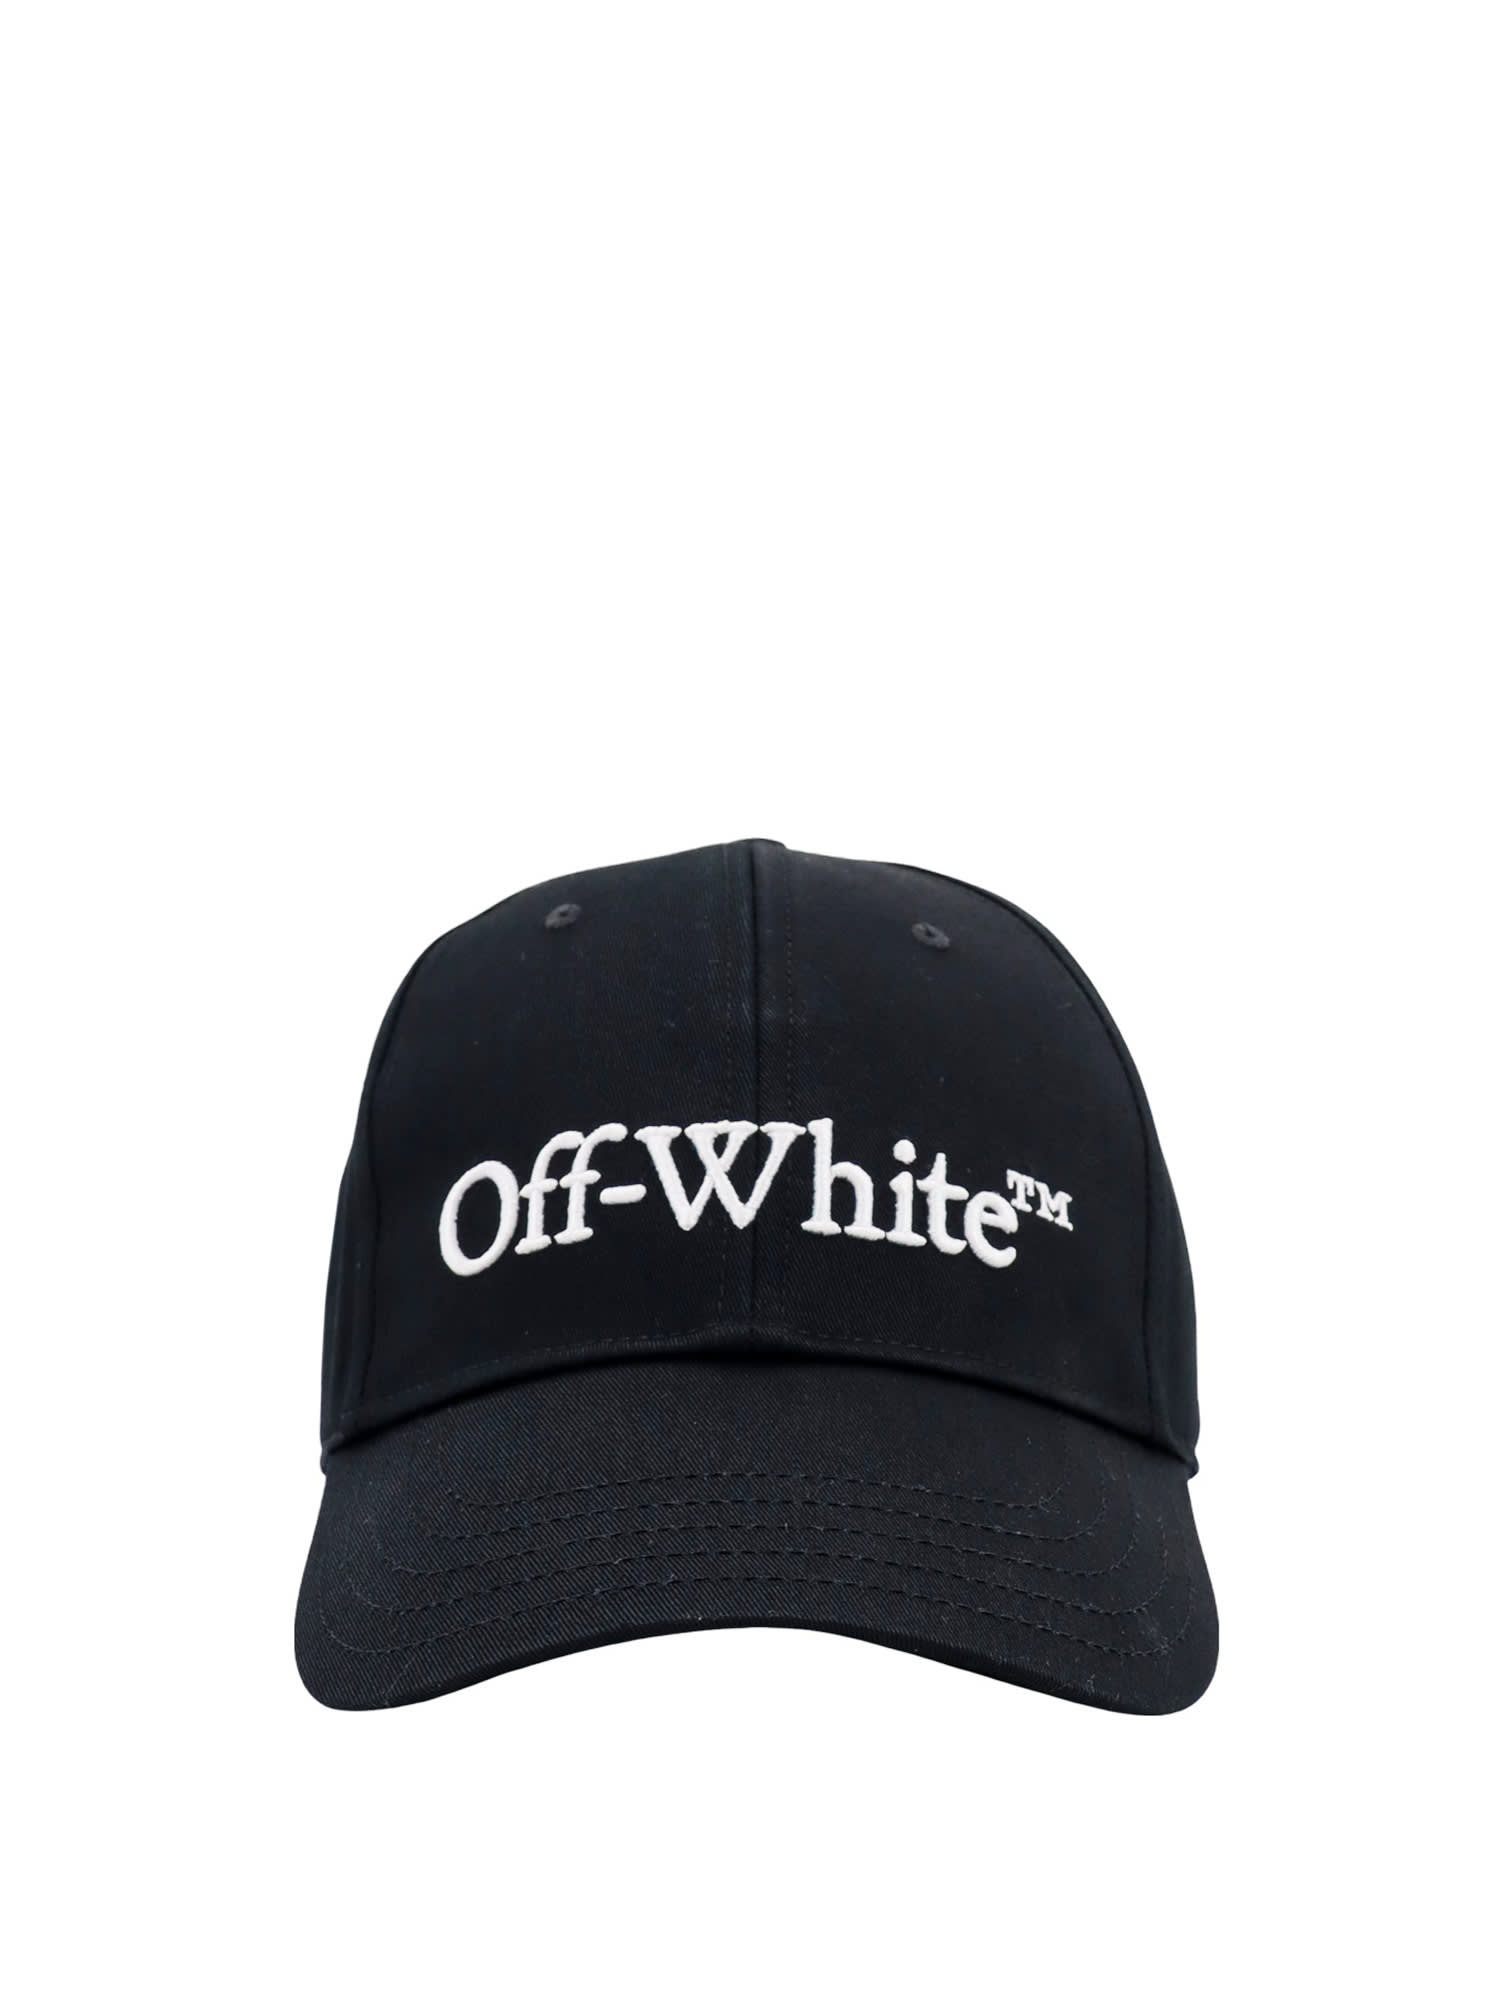 Off-white Hat In Black White